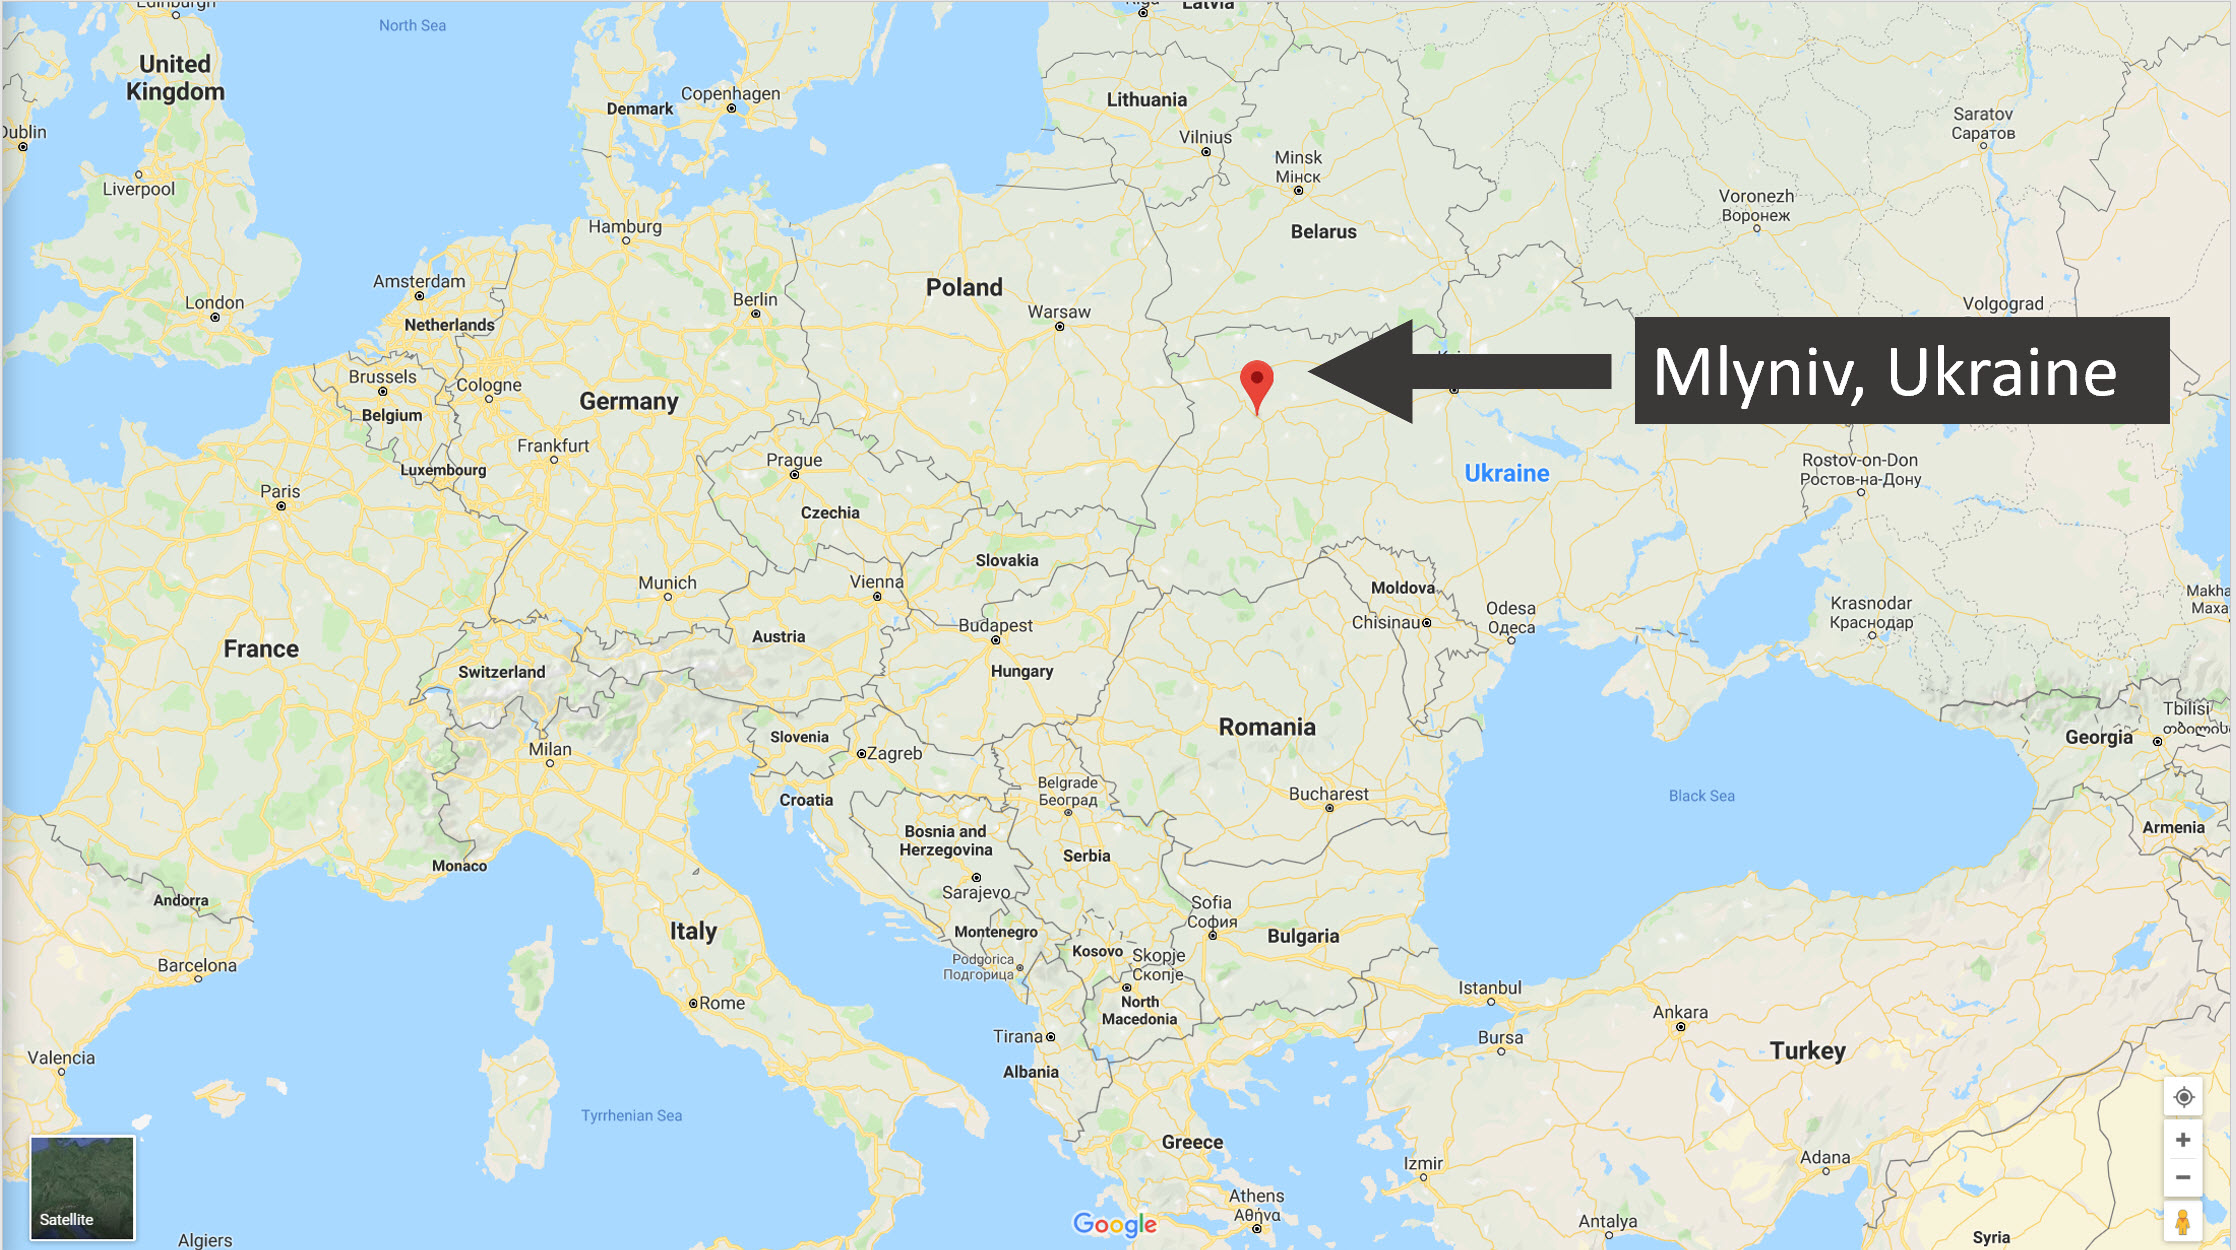 Mlyniv, Ukraine today on the map.